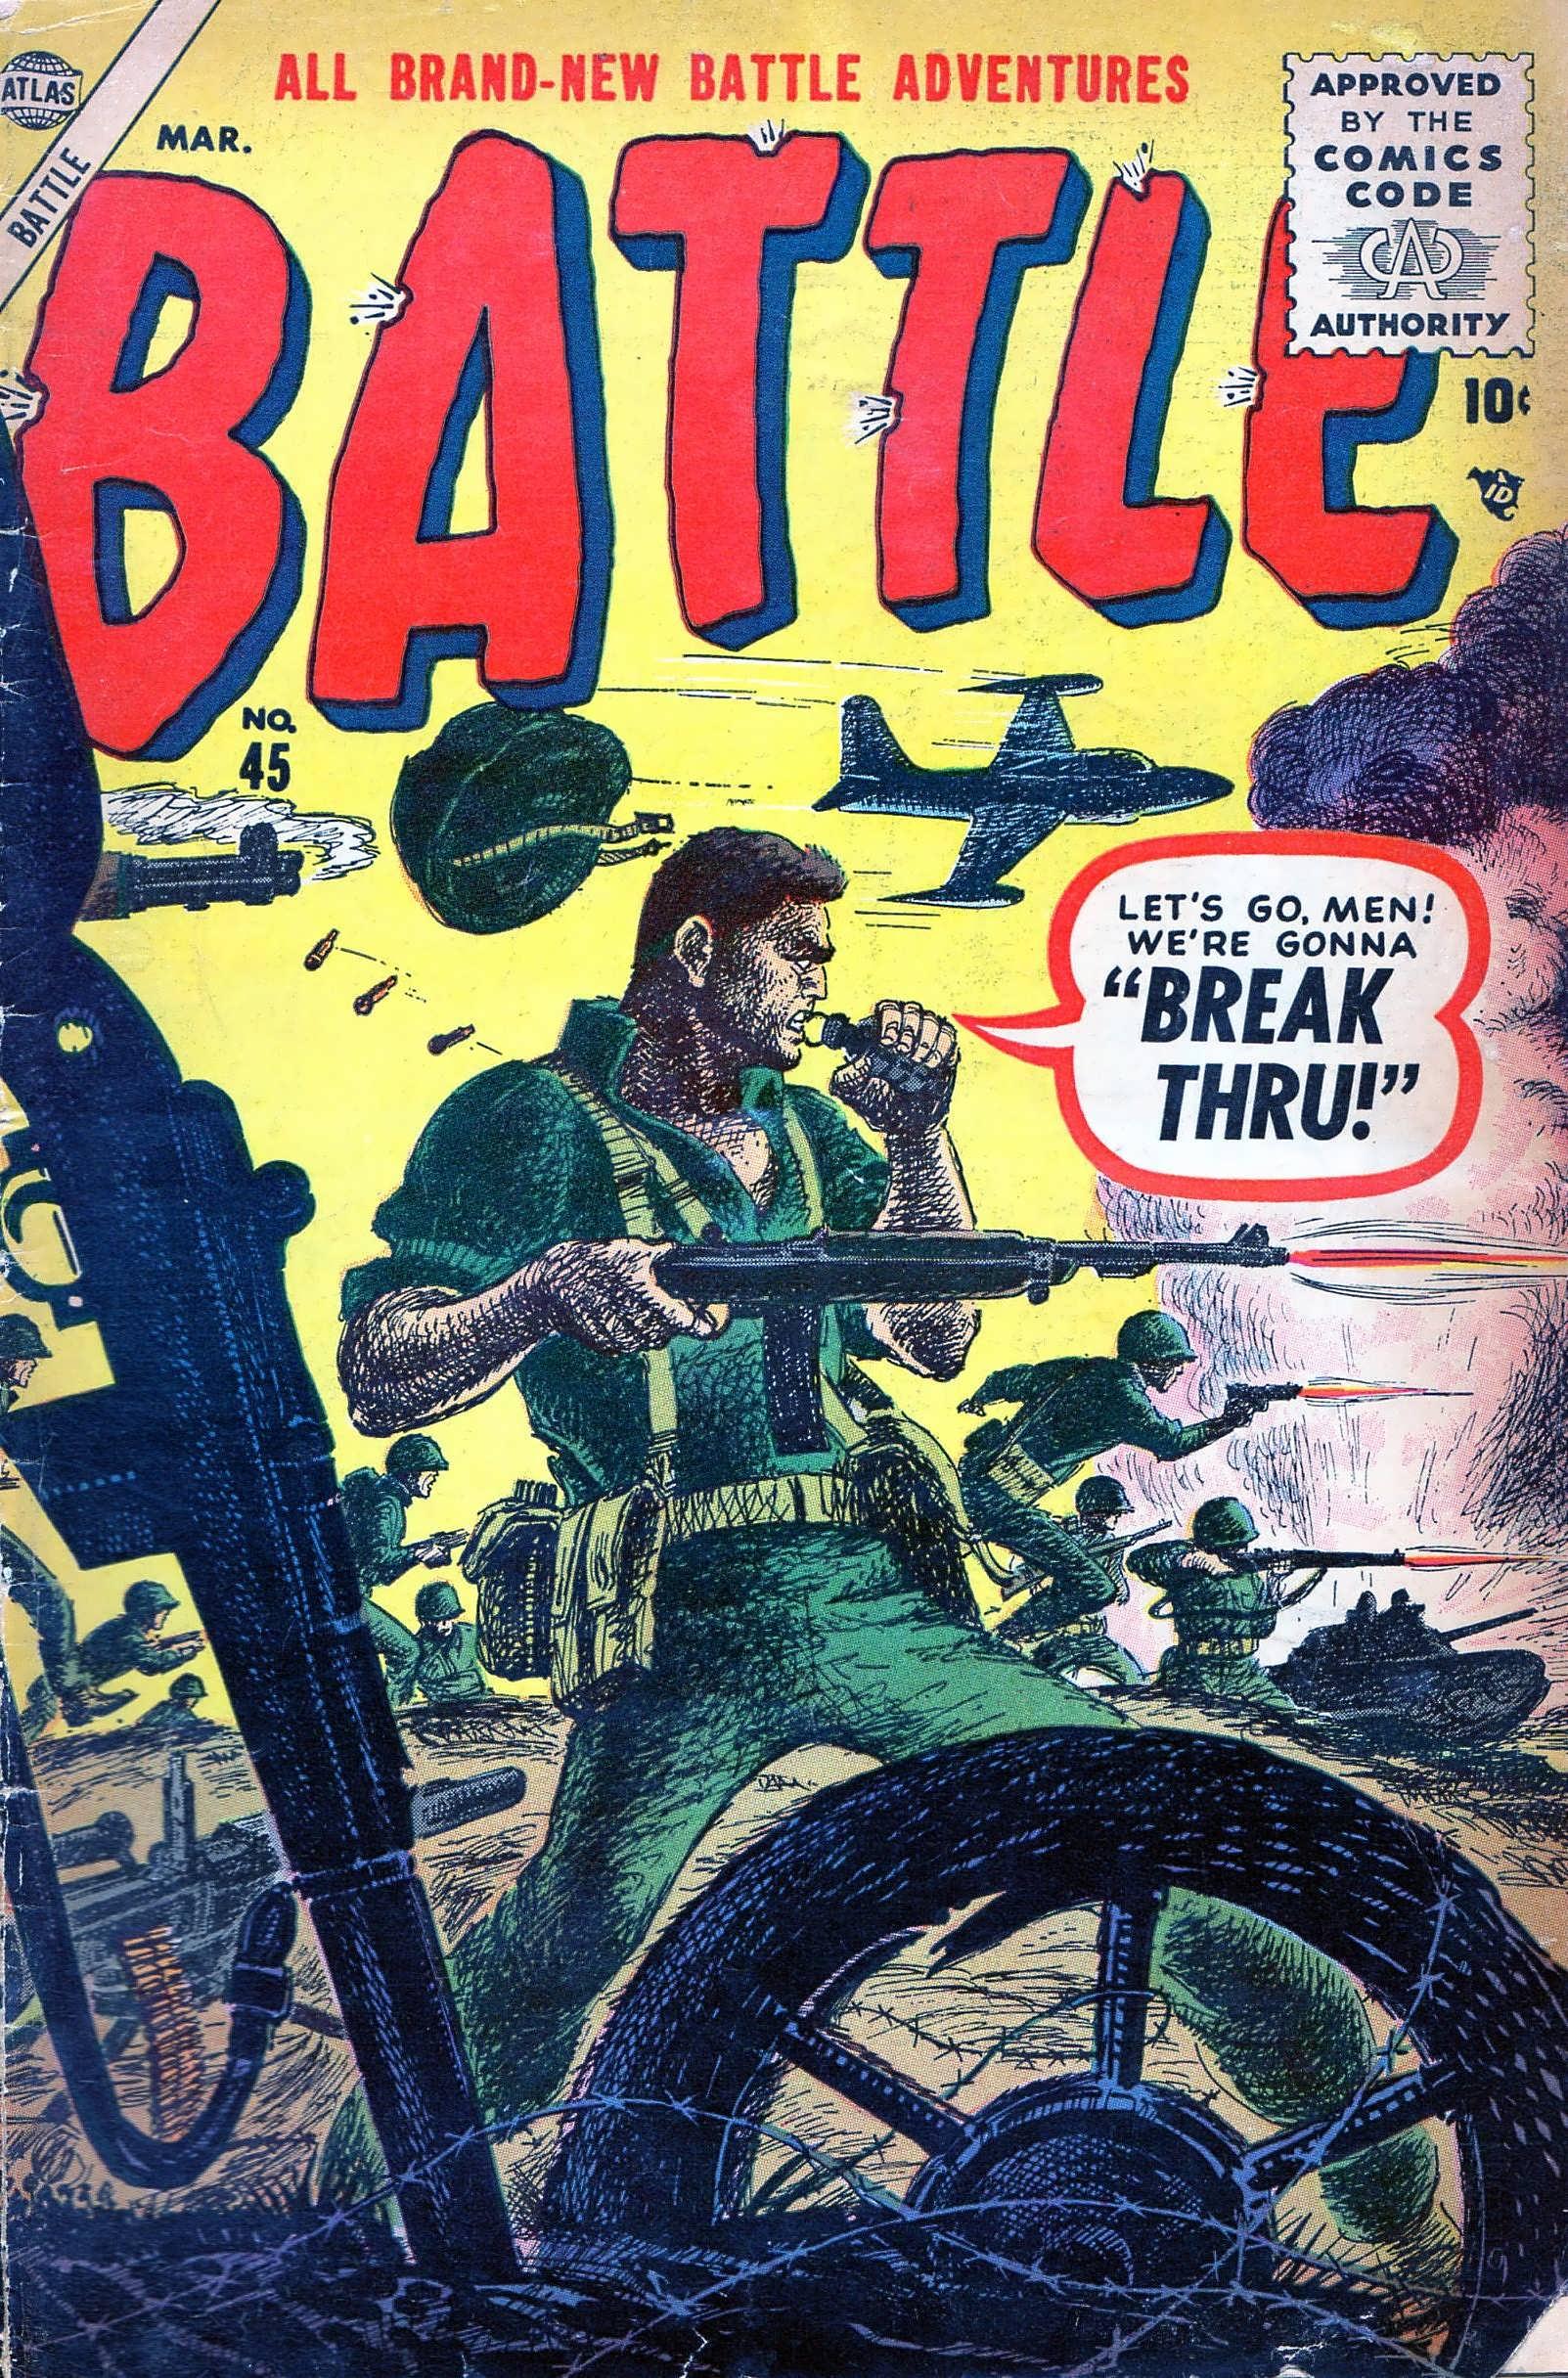 Battle Vol. 1 #45